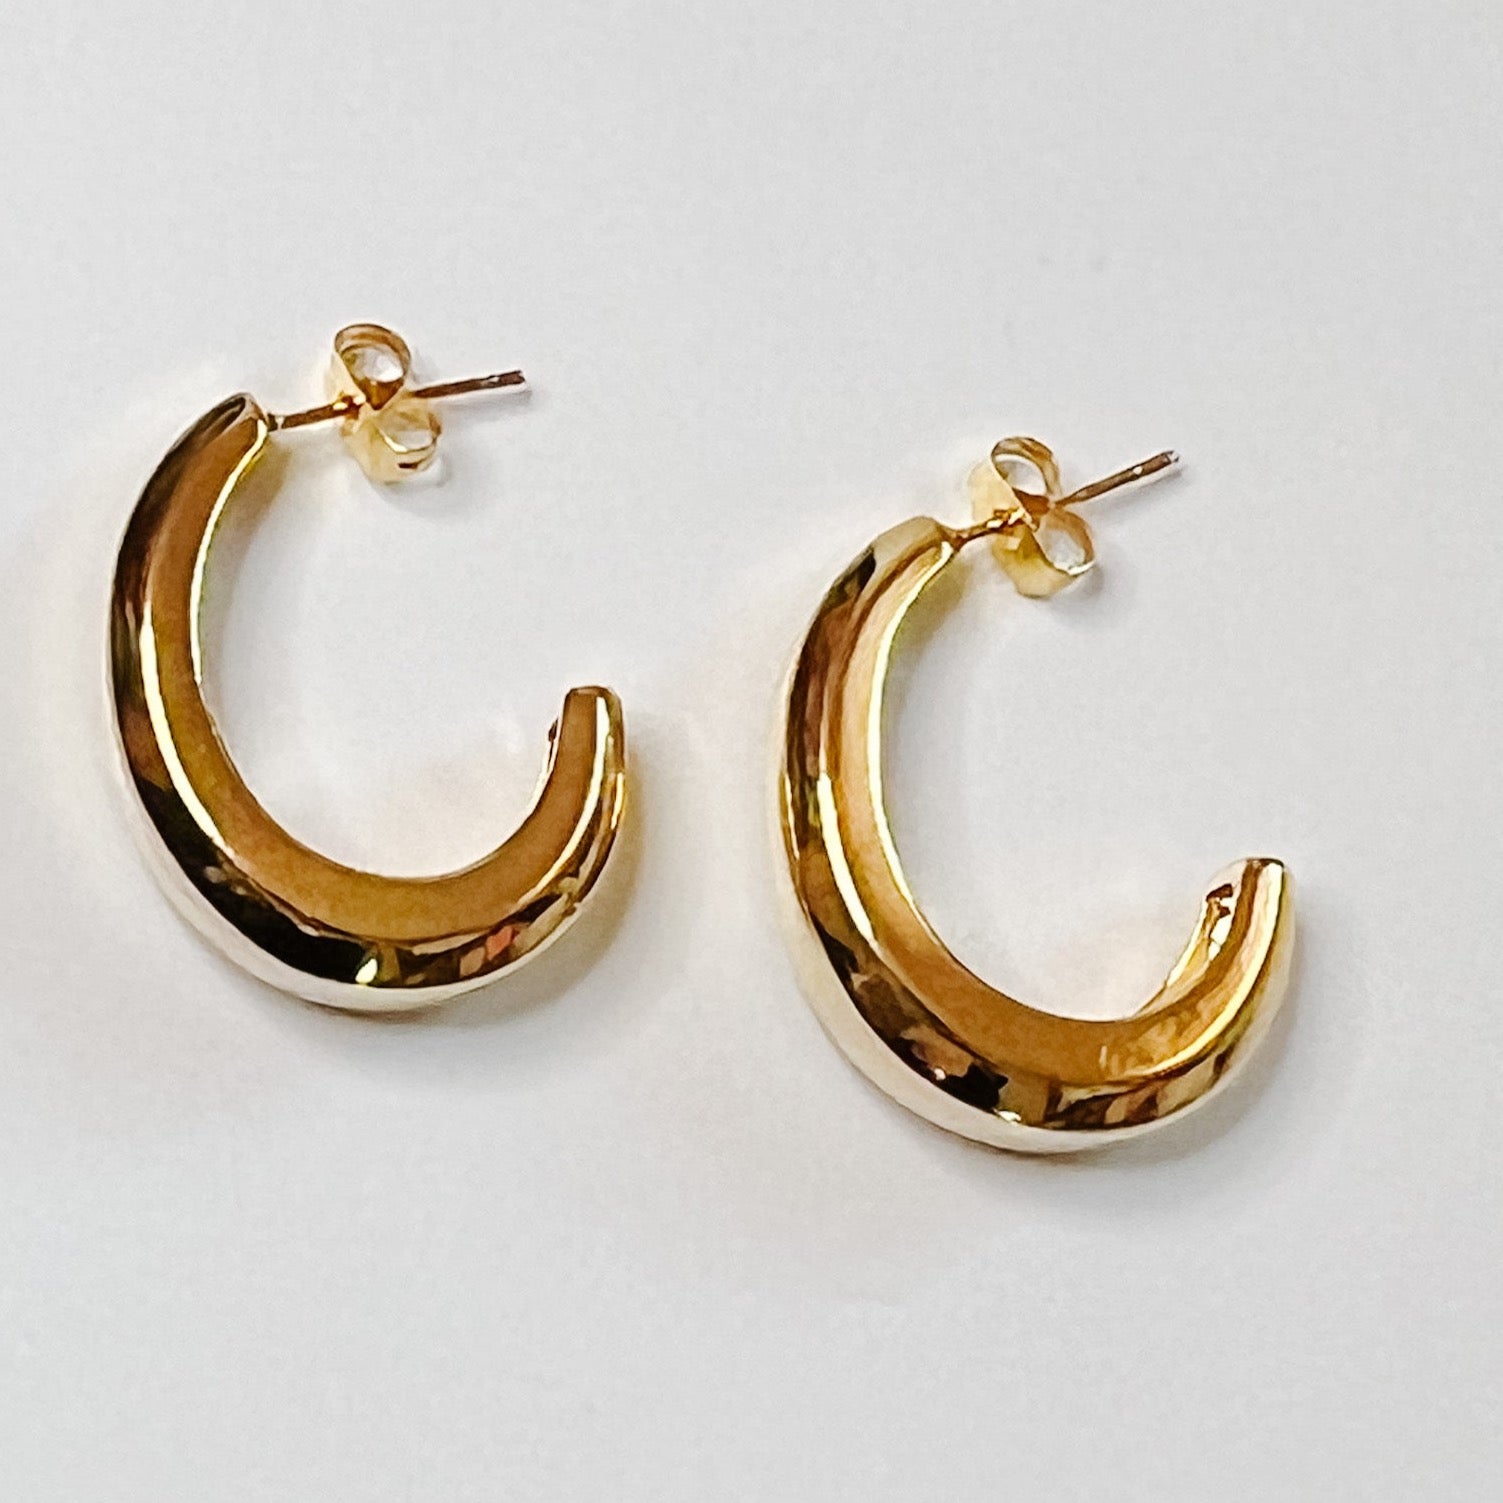 Earrings, Kristen - Danshire Market and Design 